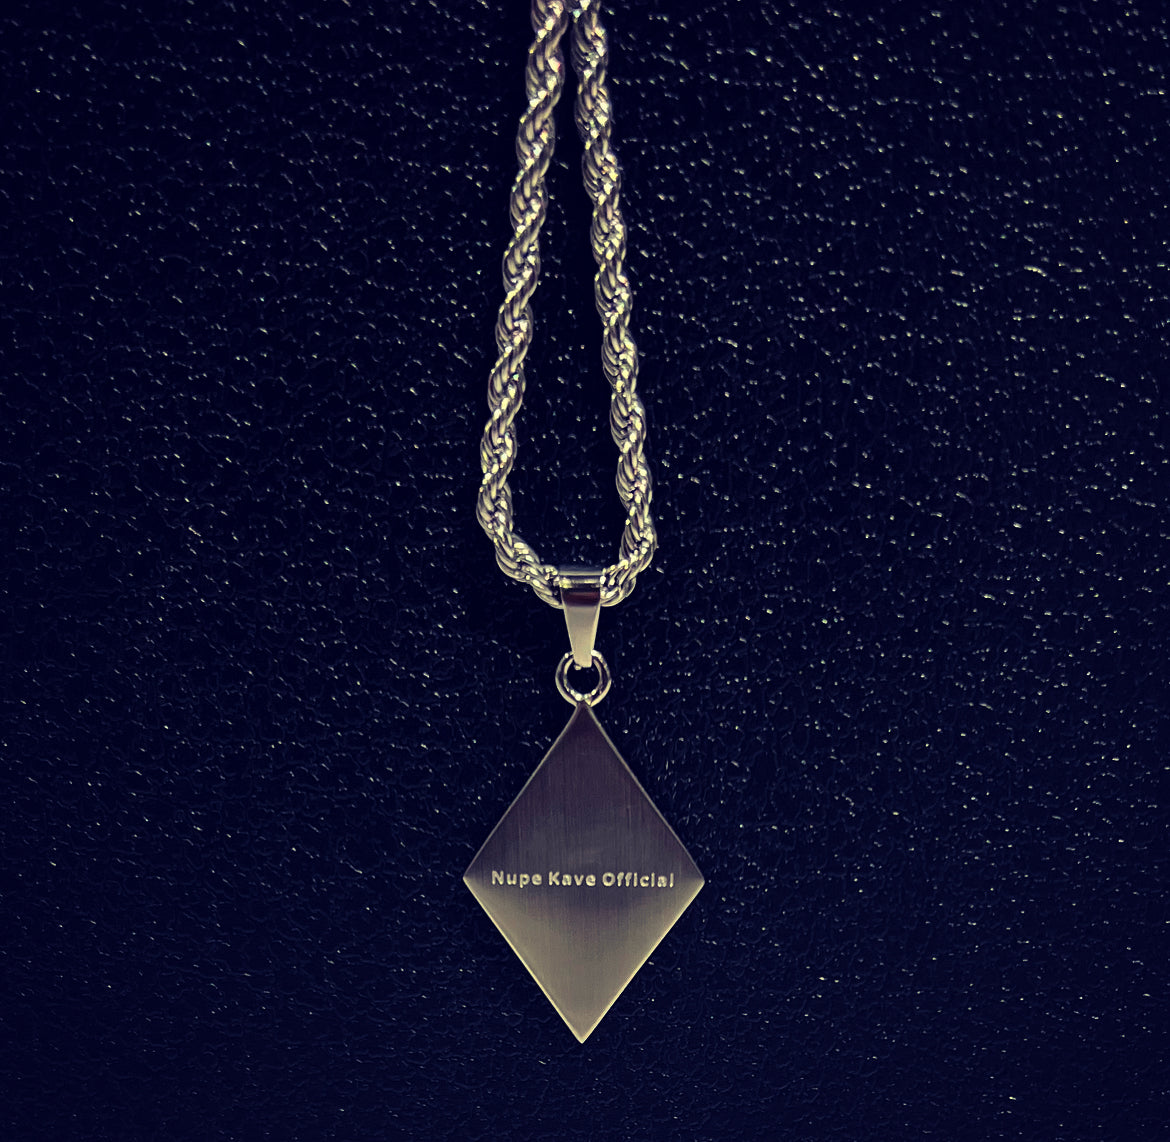 Kappa Alpha Psi Nupe Necklace - Silver